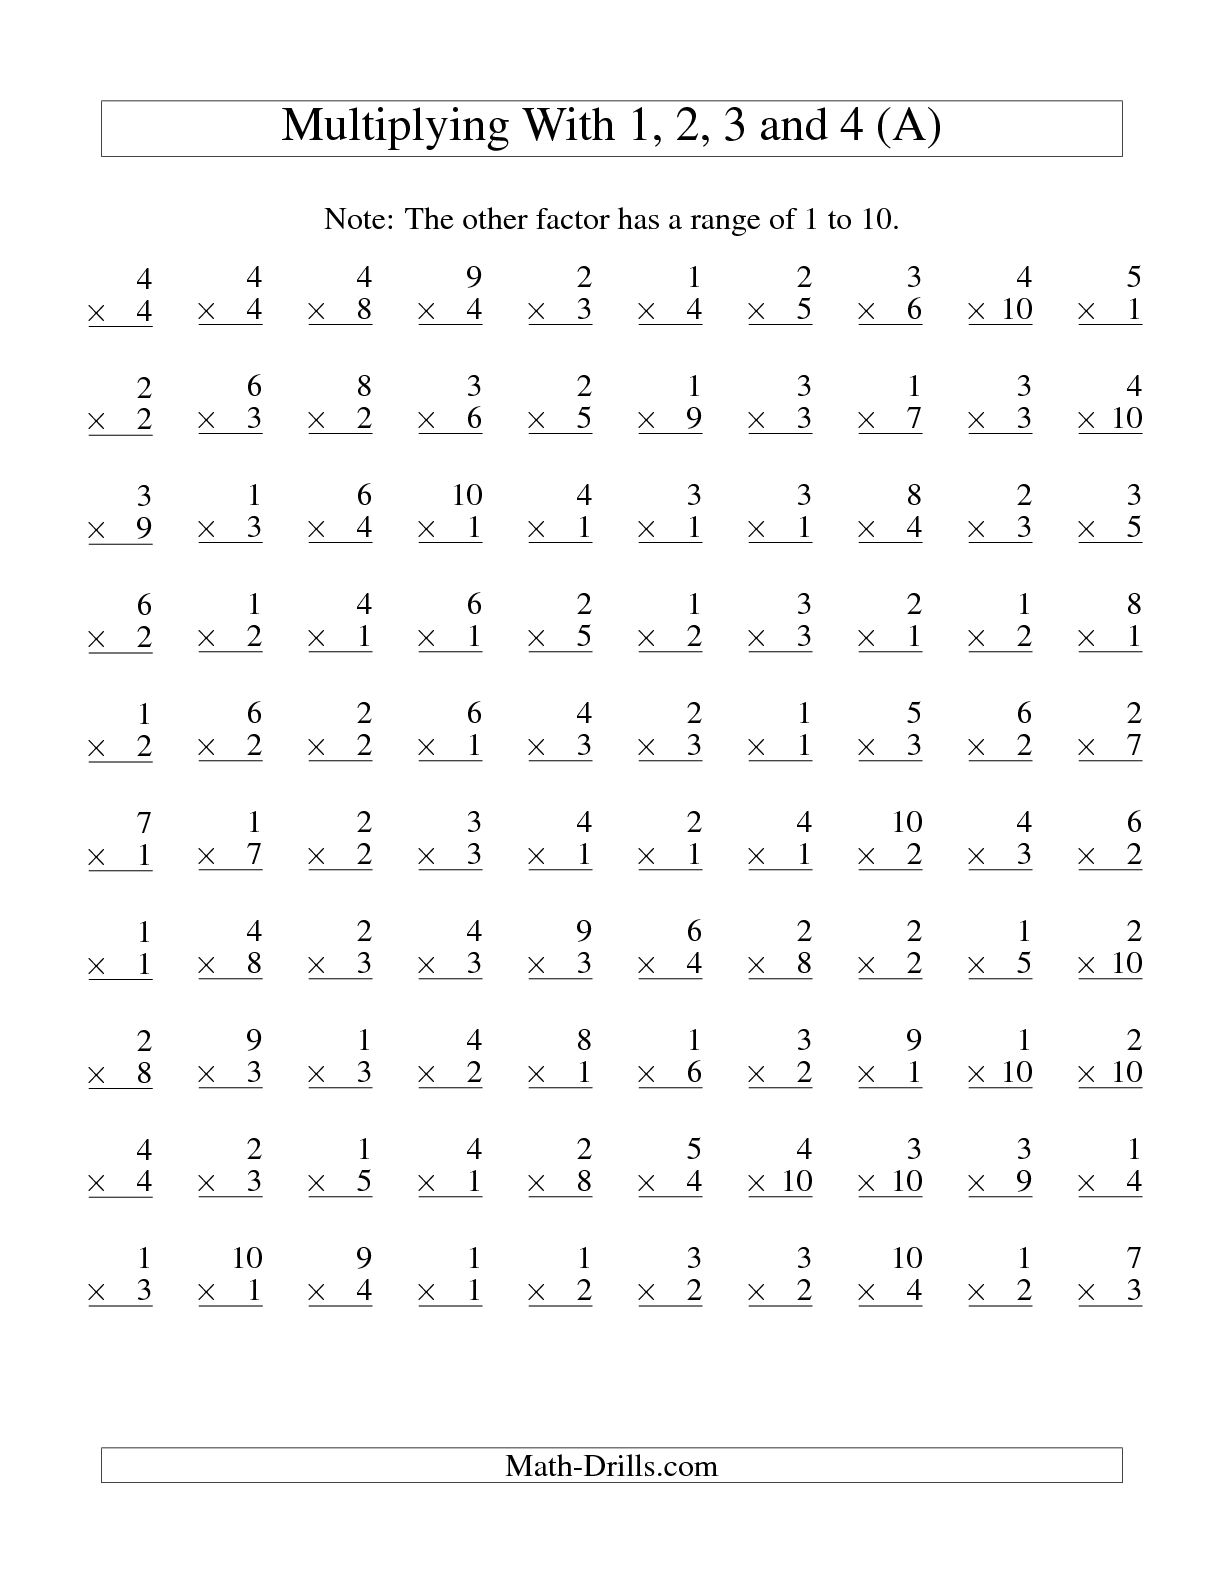 12-best-images-of-multiplication-worksheets-1-11-100-question